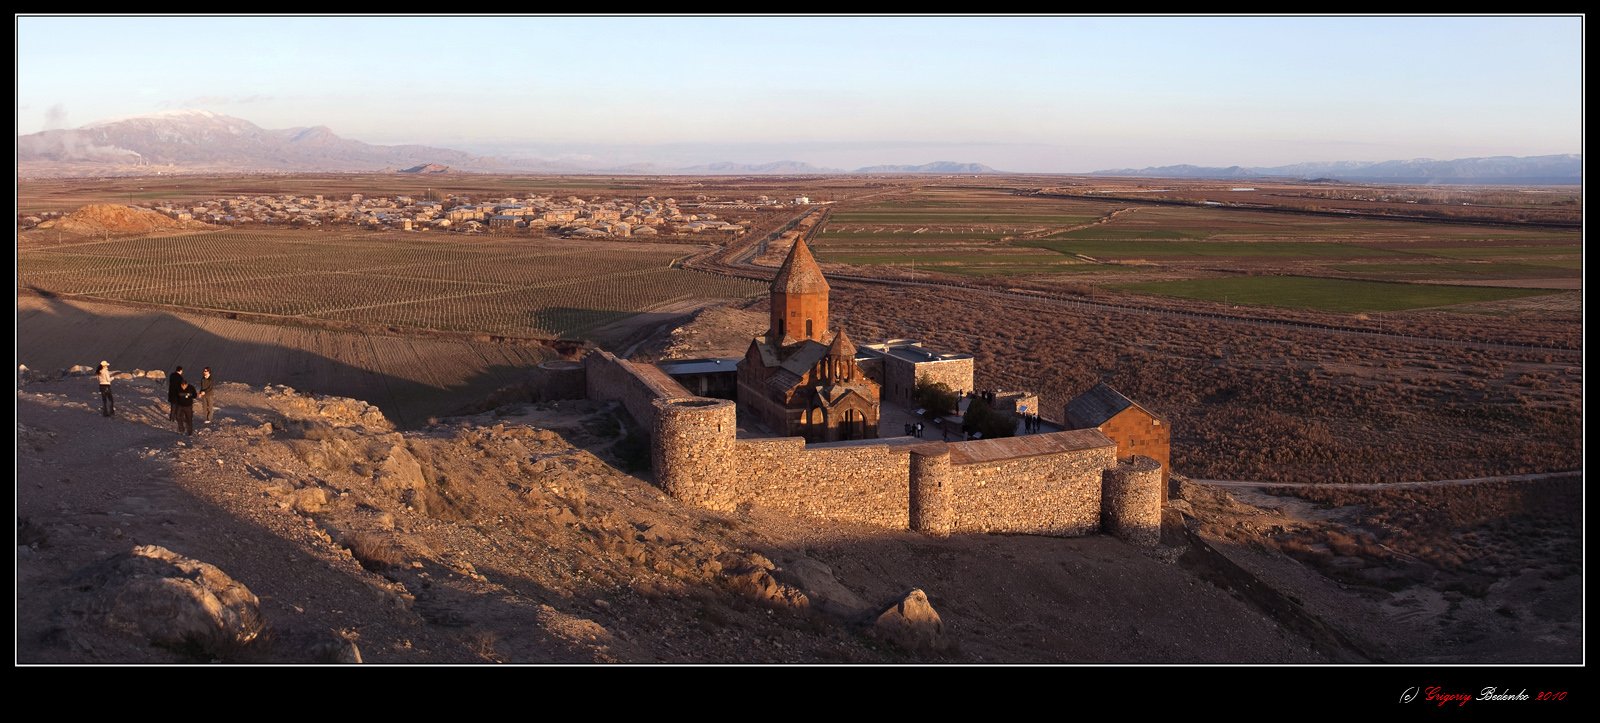 армения, араратская долина, монастырь, хор вирап, Григорий Беденко